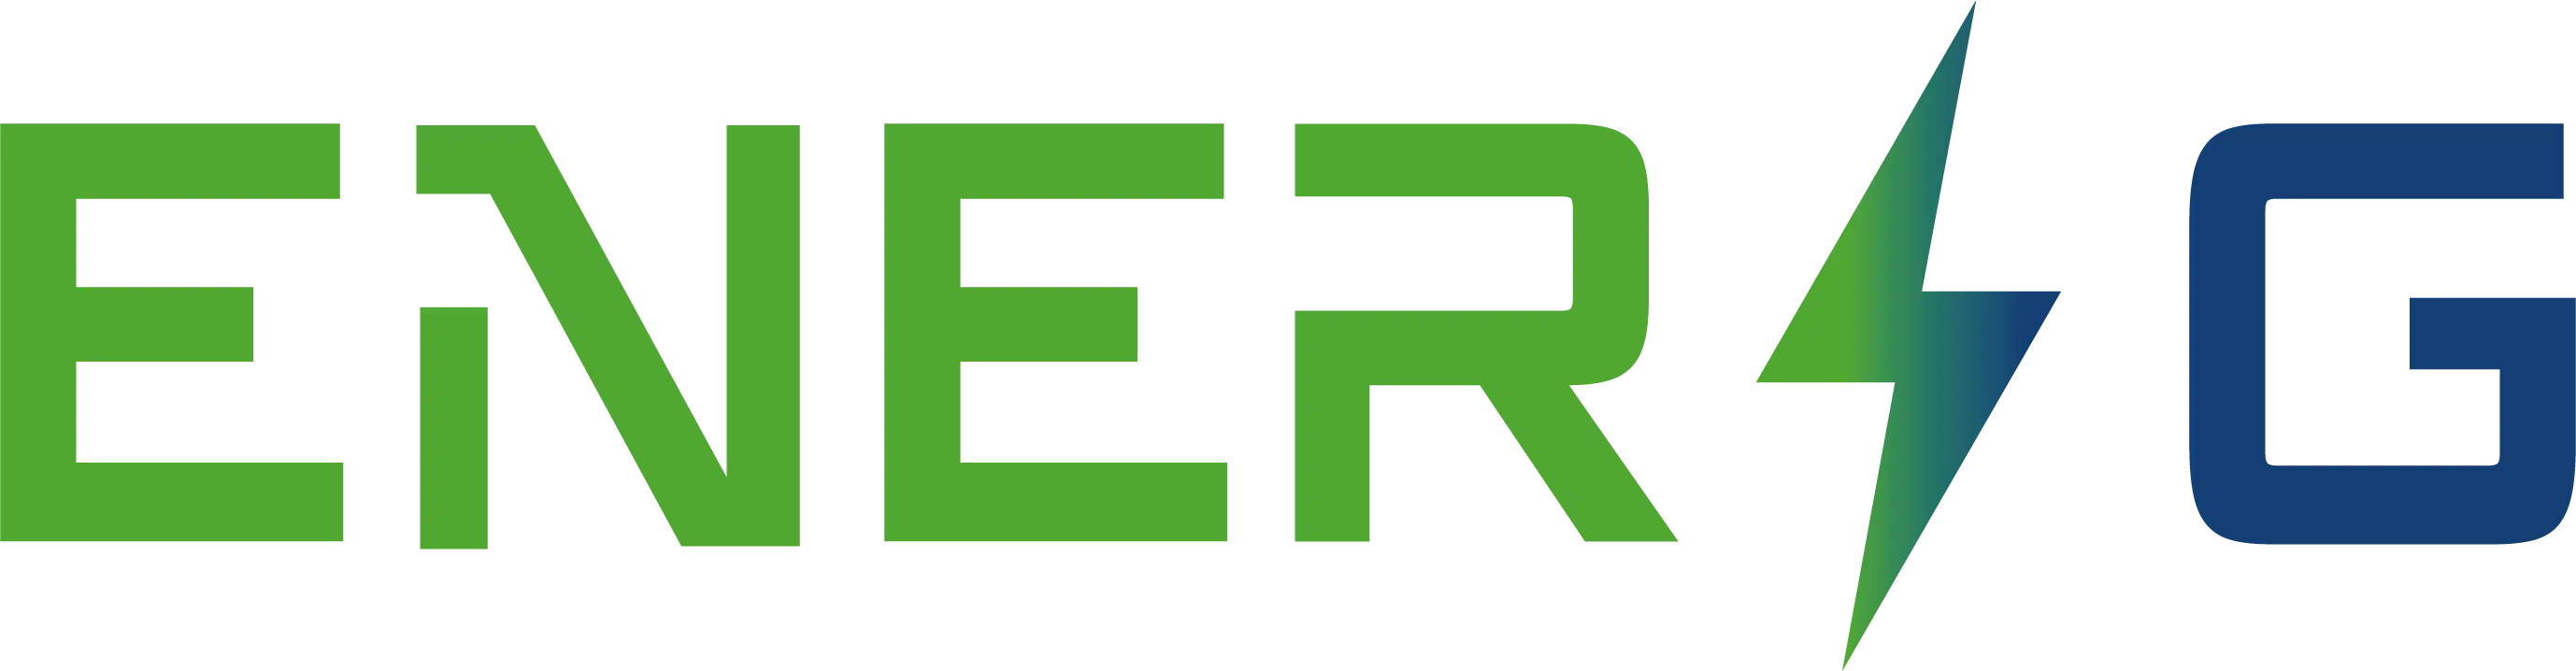 Energ logo